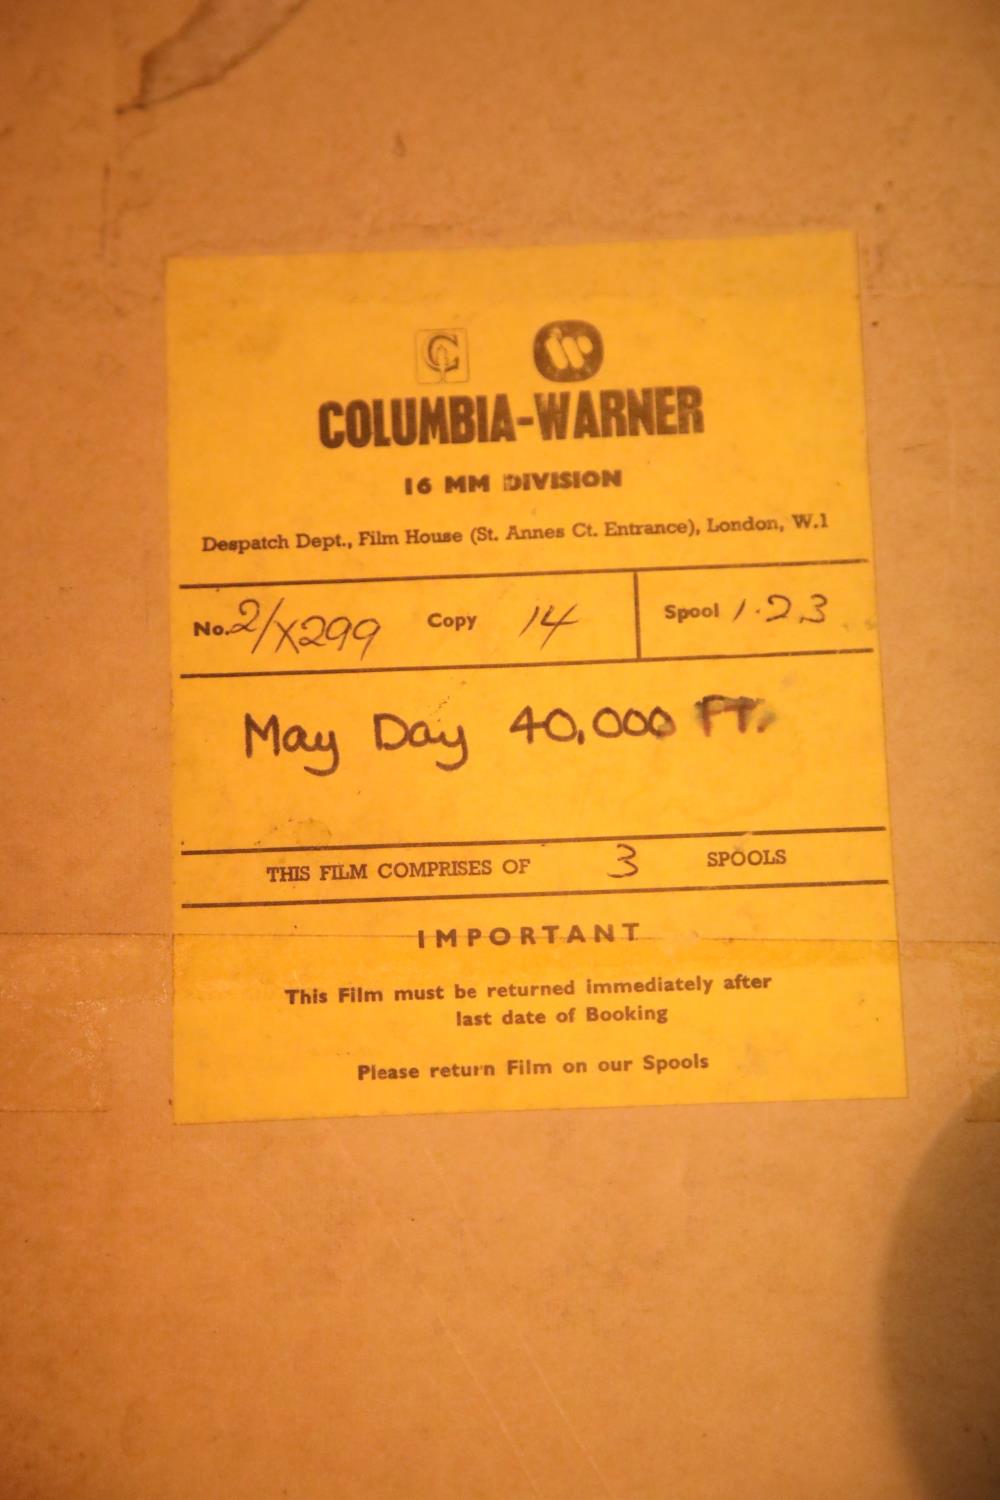 Three reel set of Columbia Warner cinema 16mm colour film mayday at 40,000ft. P&P Group 3 (£25+VAT